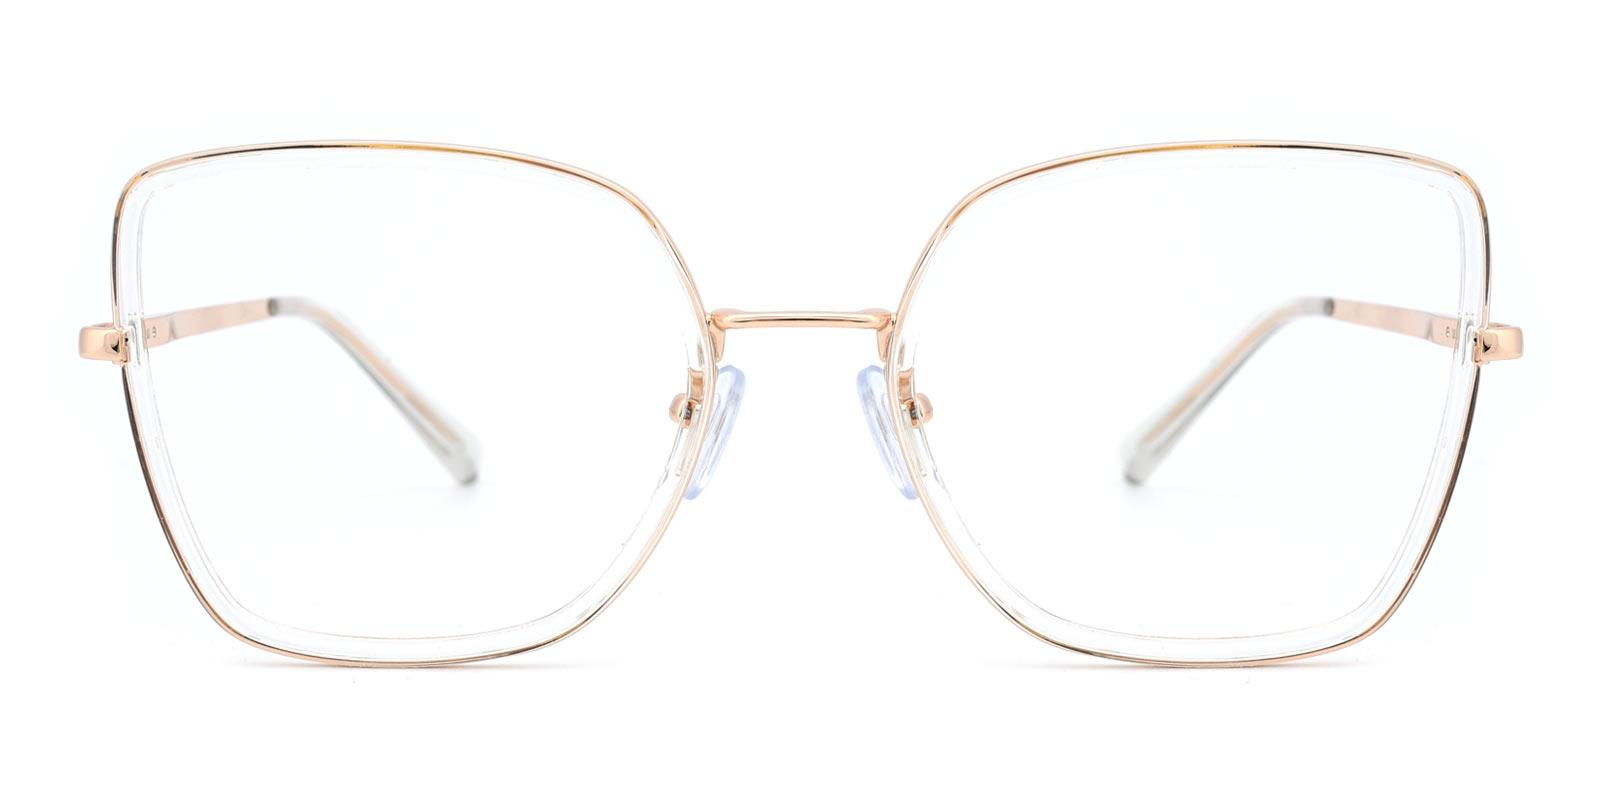 Fay-Translucent-Geometric / Square-Combination-Eyeglasses-detail